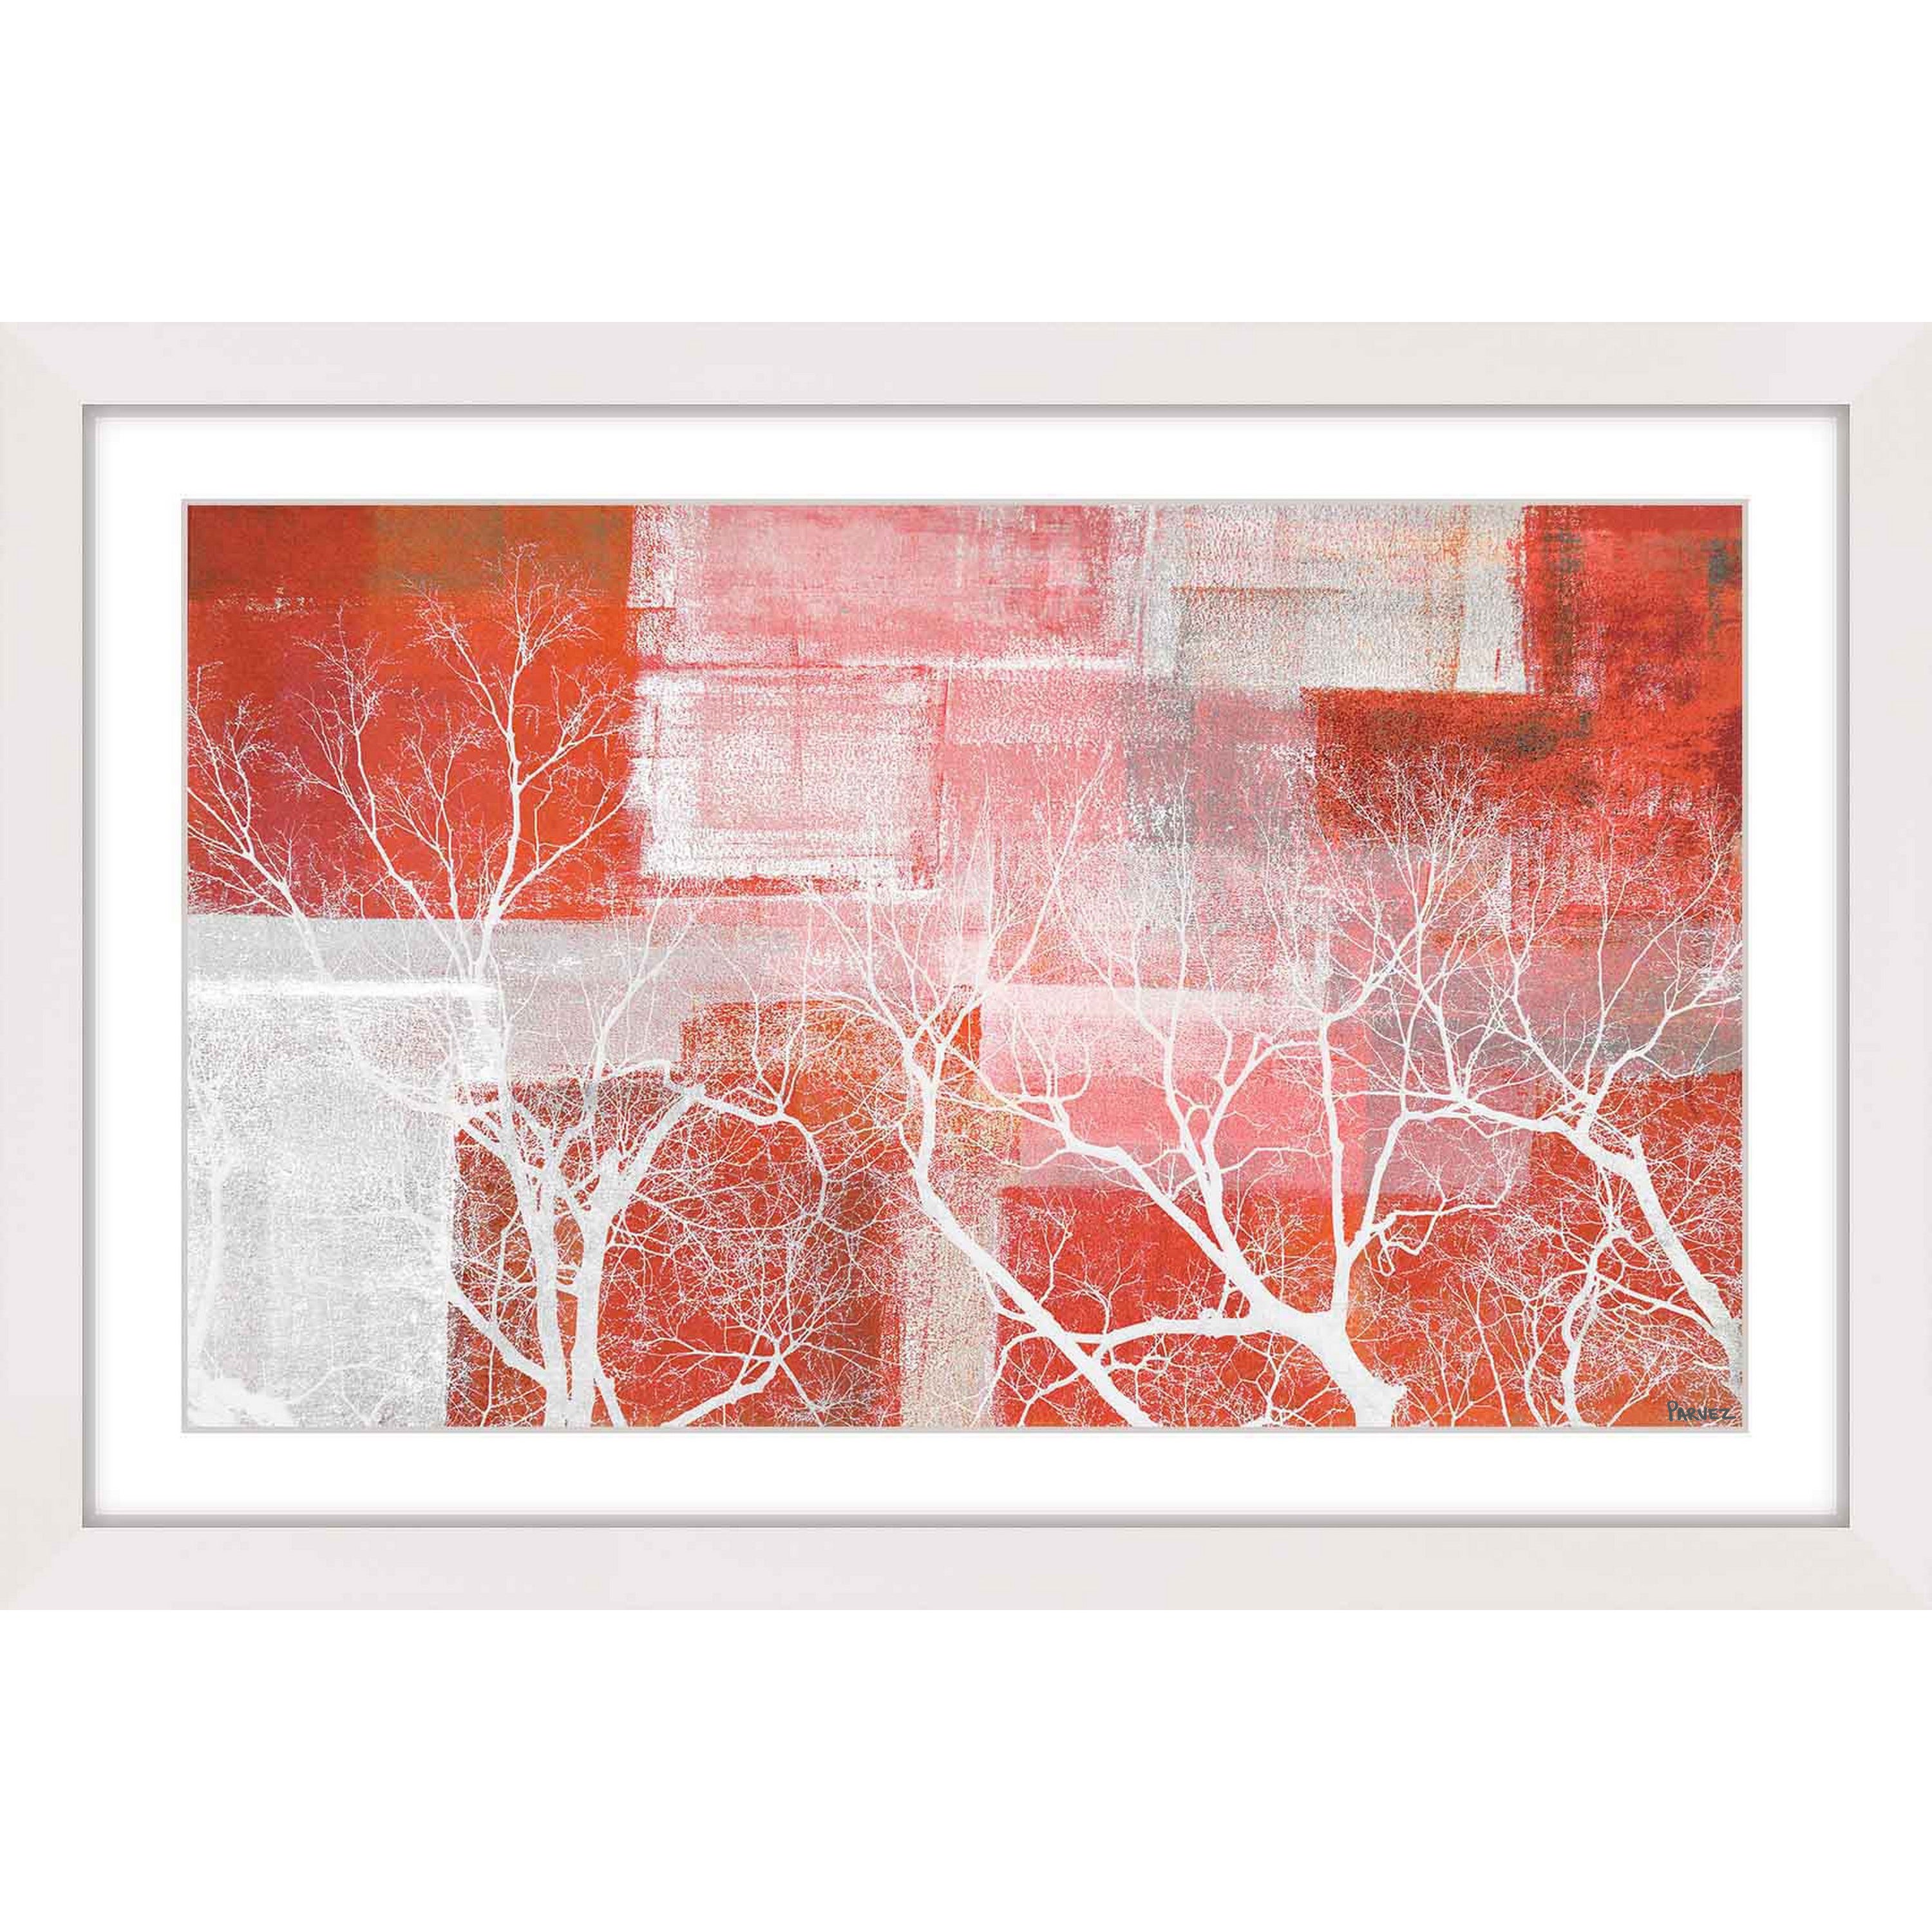 Handmade Parvez Taj - Red Landscape Framed Printing Print